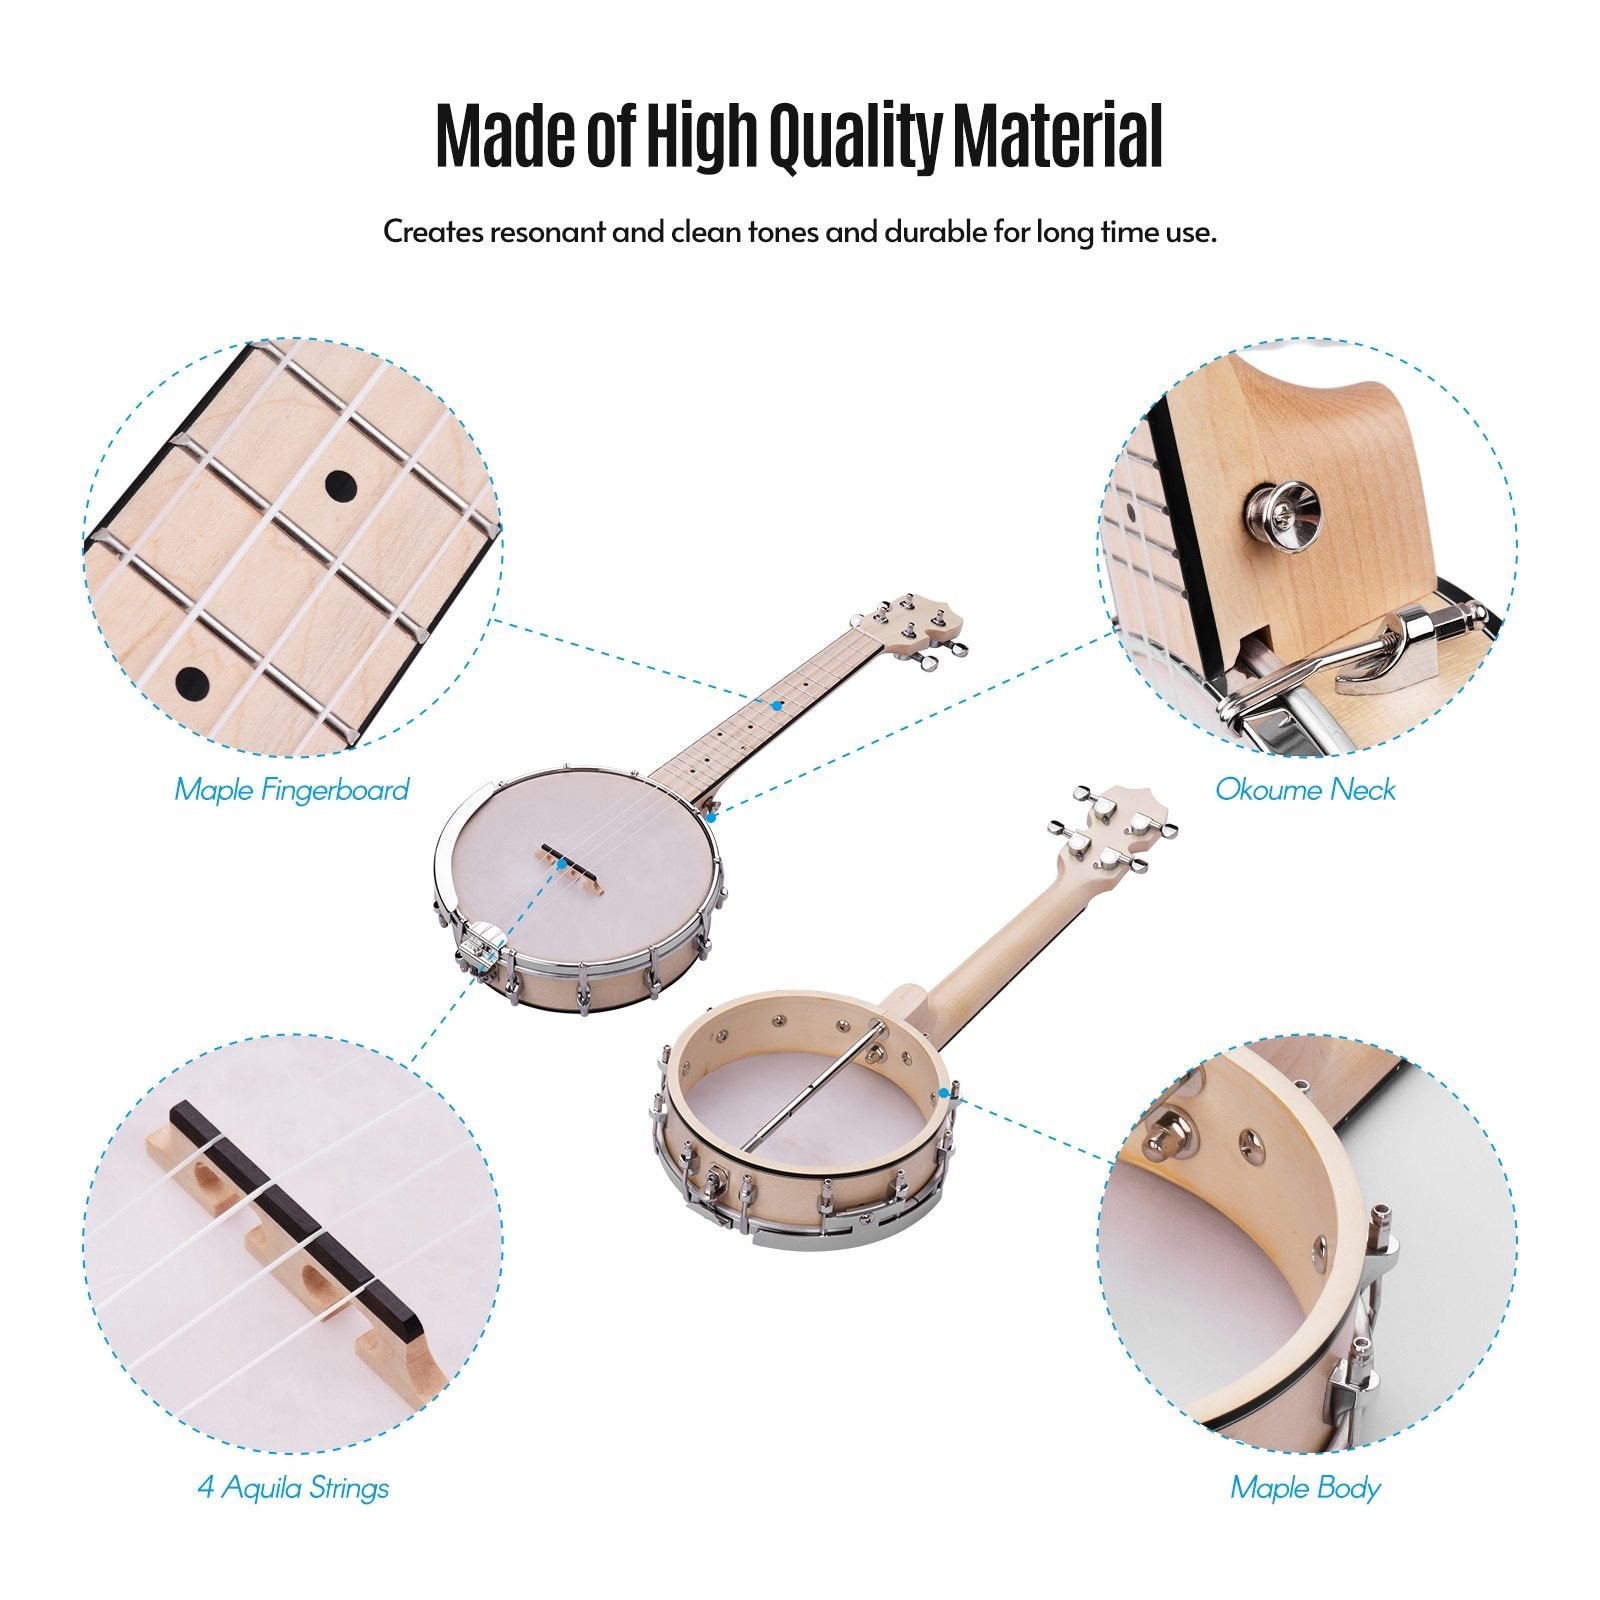 Concert 23 Inch Resonator Banjo Uke 4 String Banjolele Sapele Body Okoume Neck Technical Wood Fingerboard Material - AKLOT